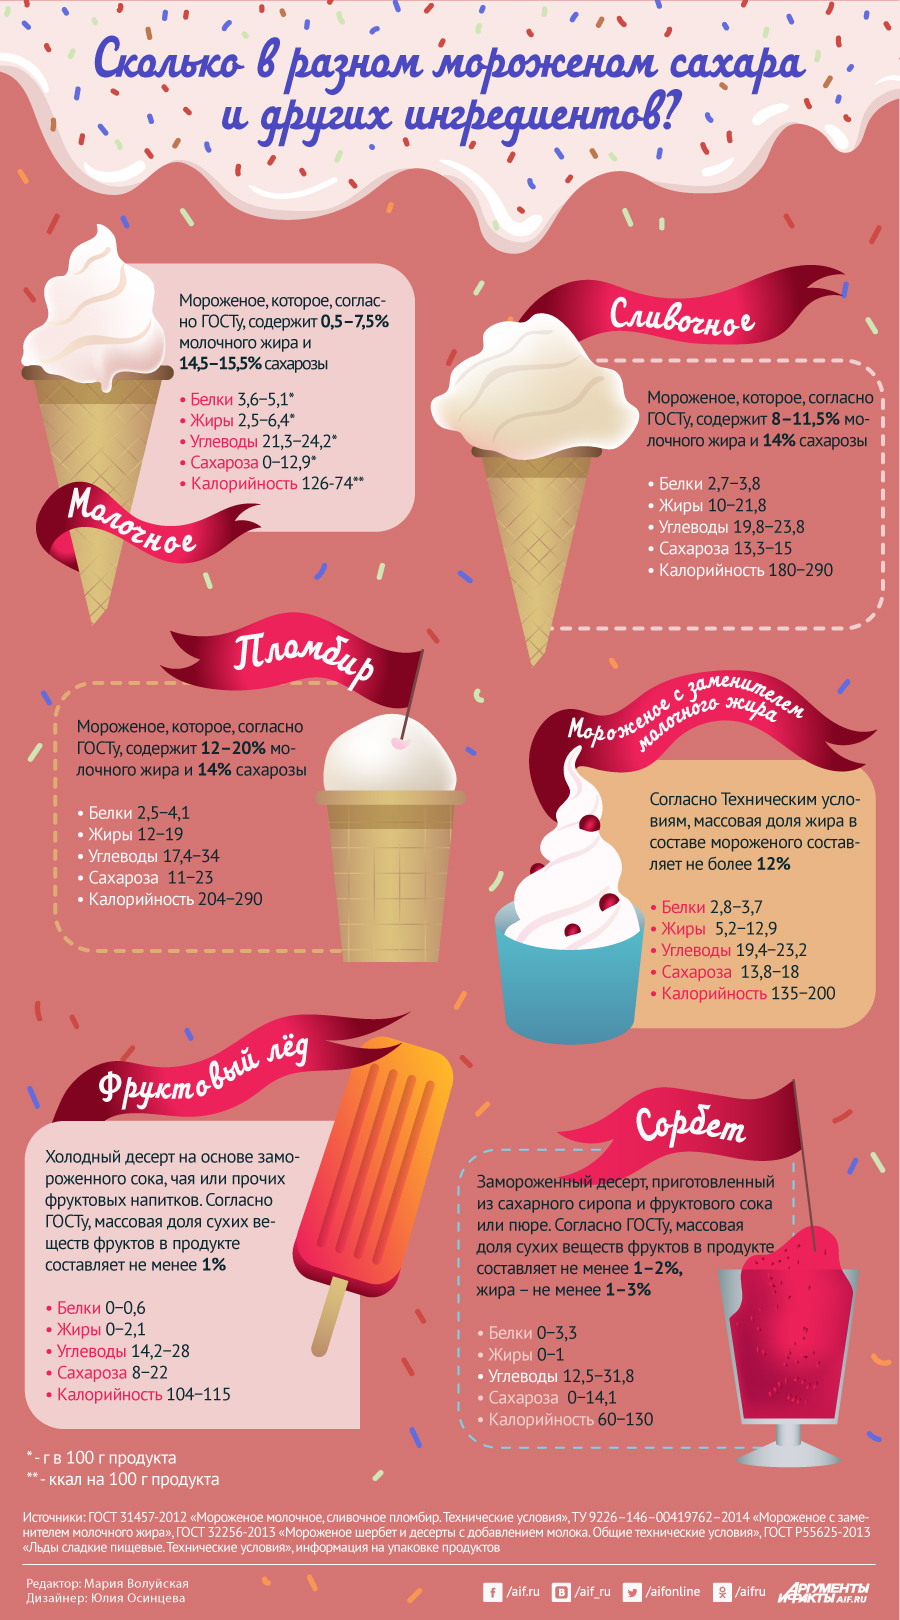 Сколько в разном мороженом сахара?